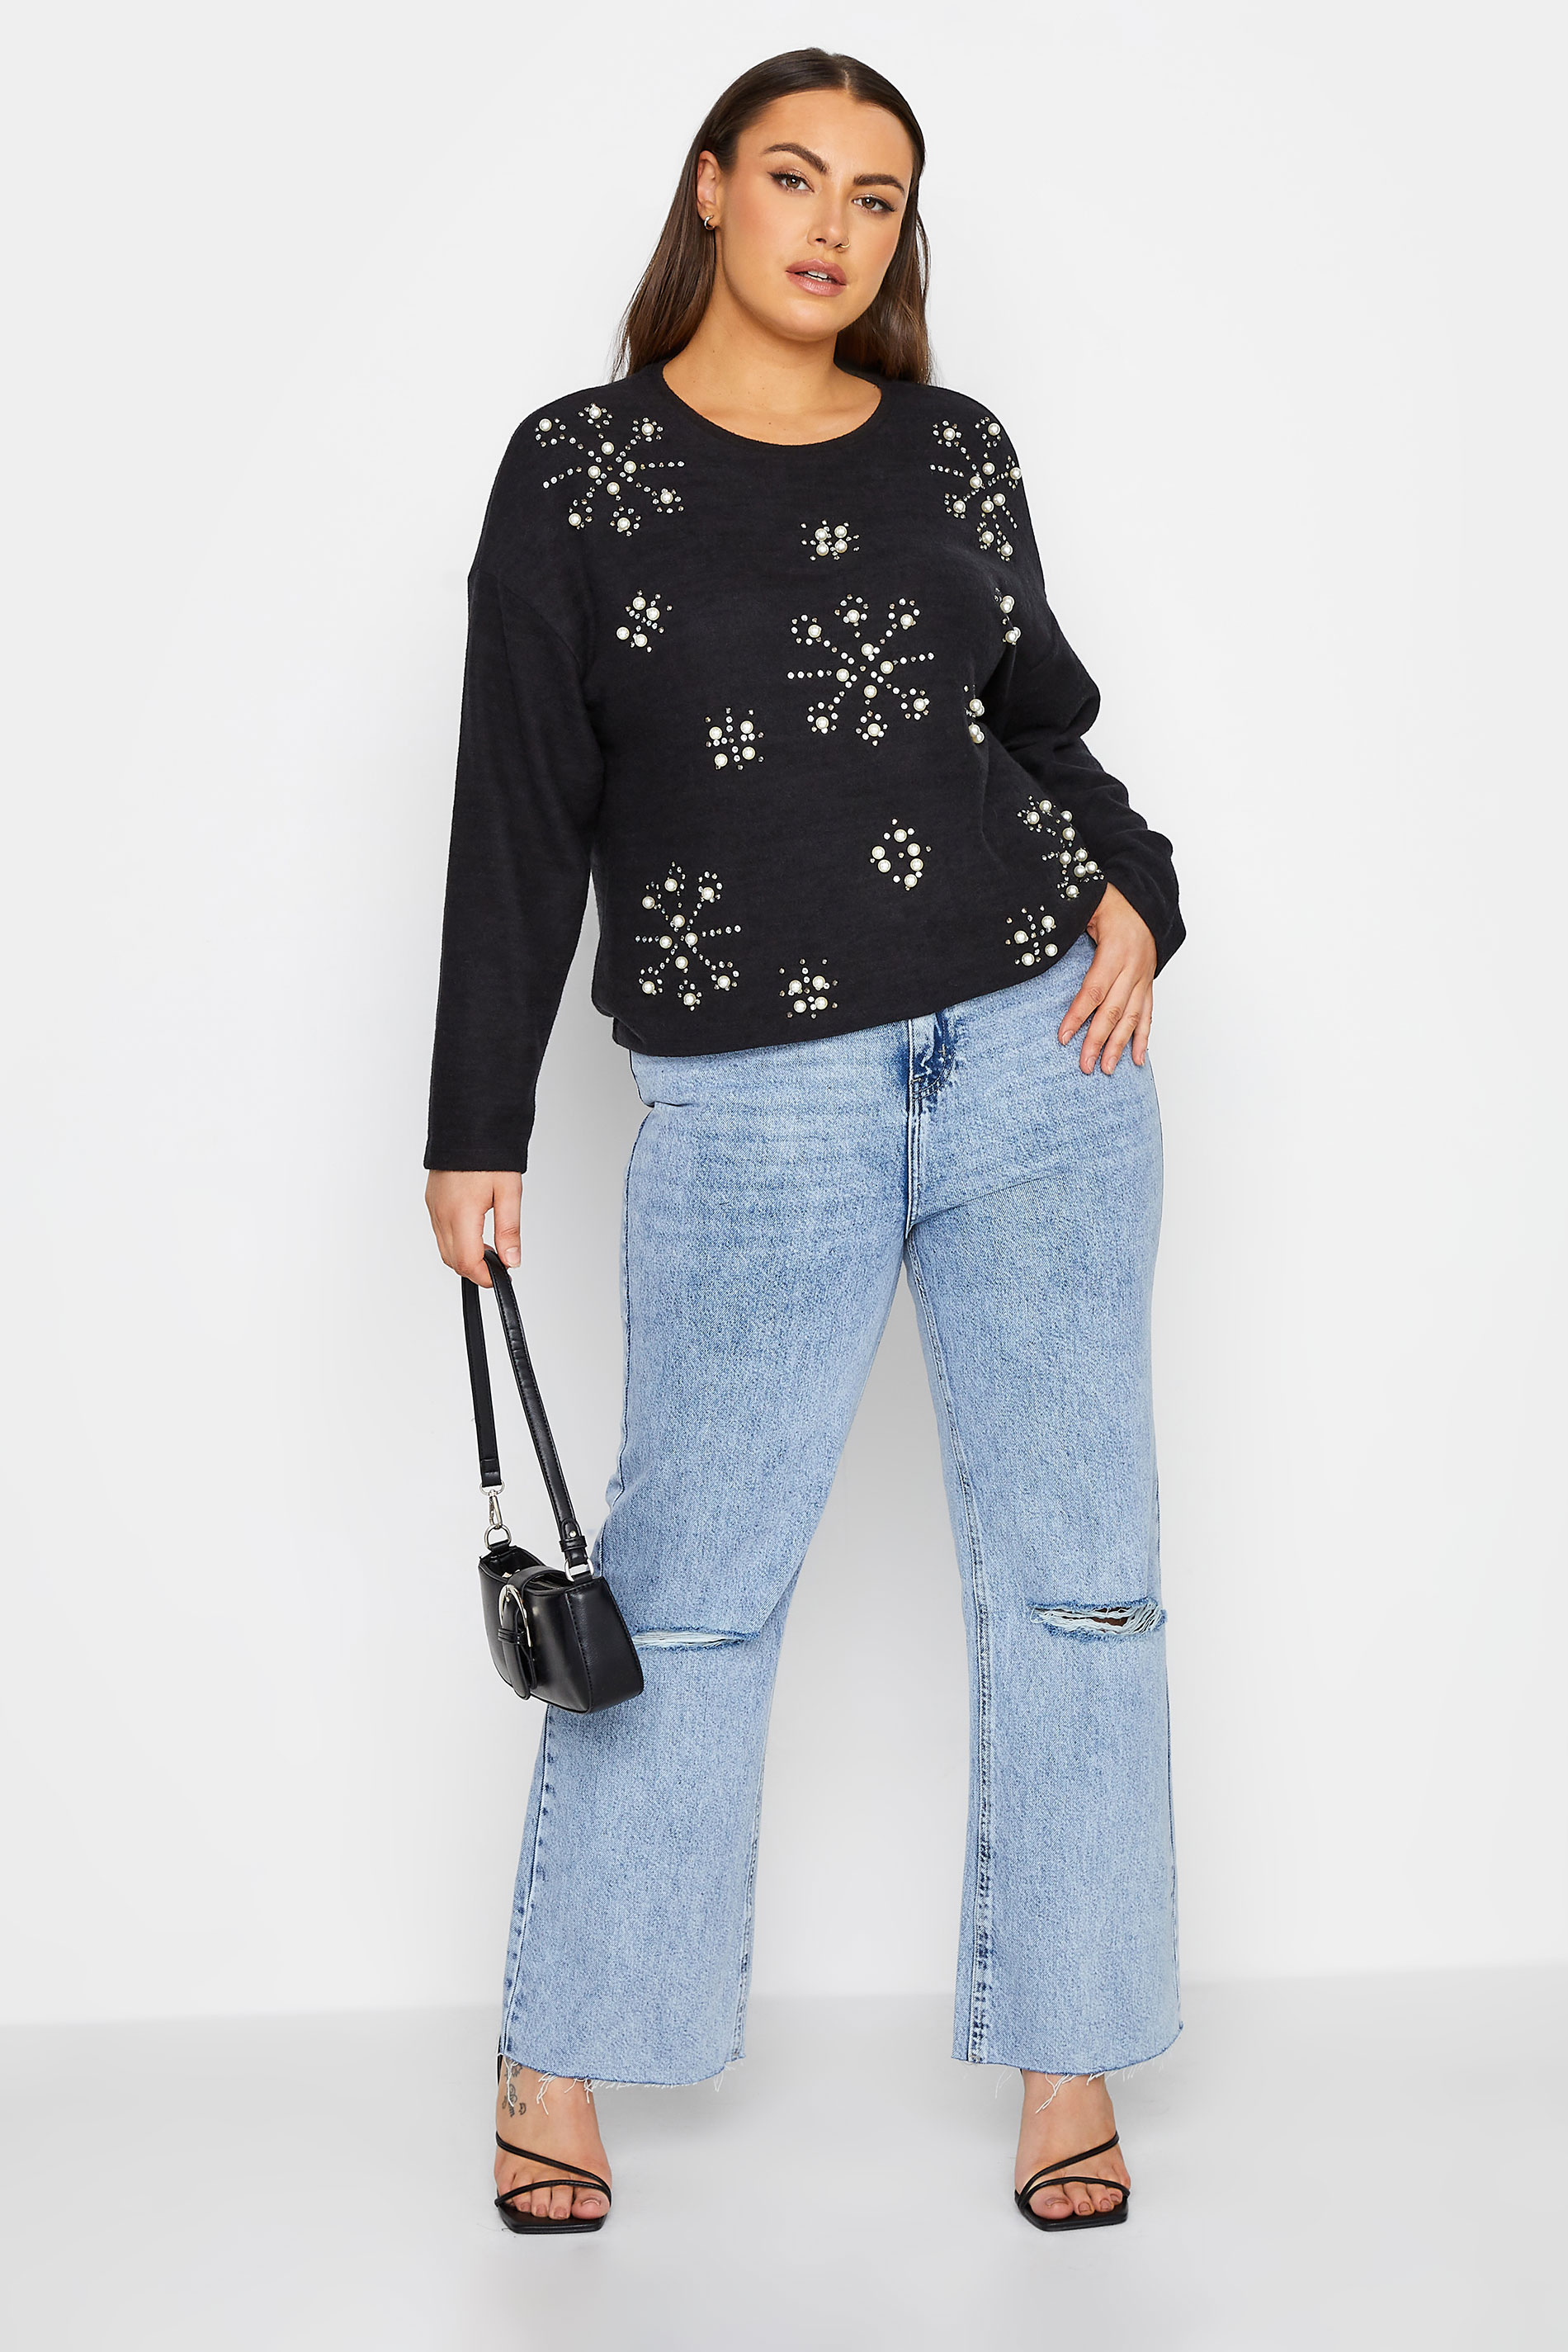 YOURS LUXURY Curve Black Stud & Pearl Embellished Sweatshirt | Yours Clothing 3